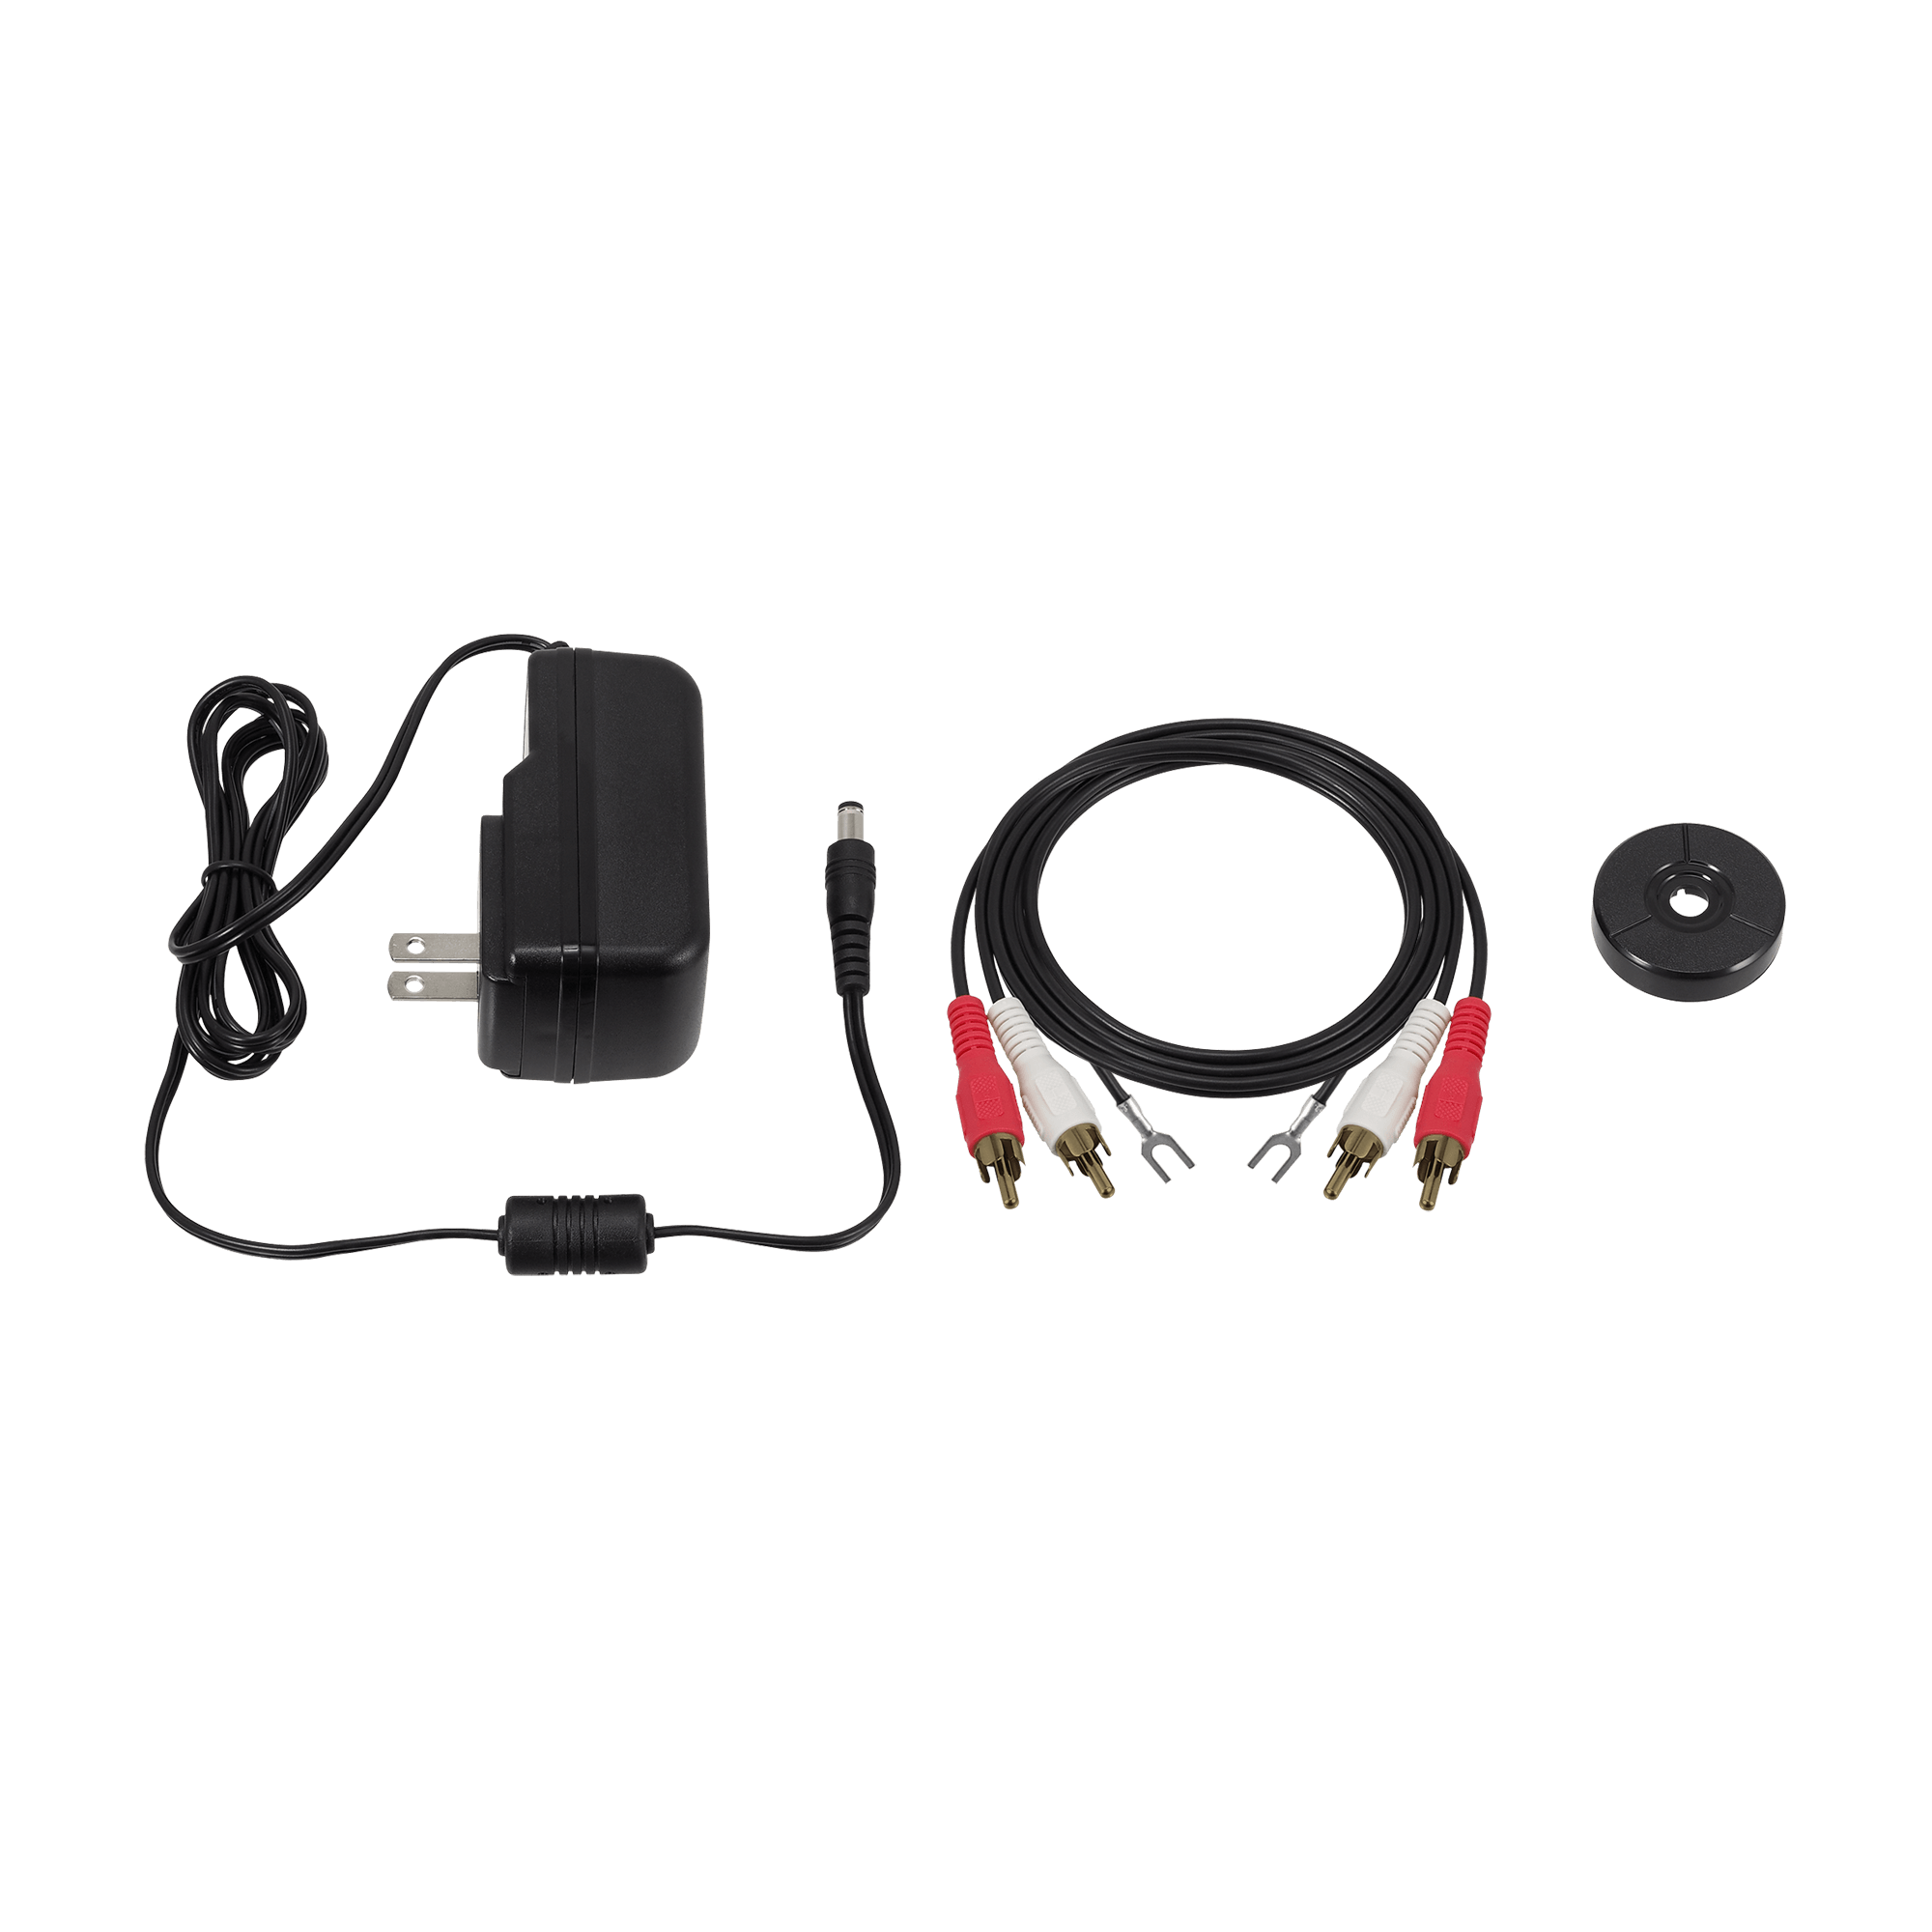 AT-LP120XUSB - Direct-Drive Turntable (Analog & USB) | Audio-Technica